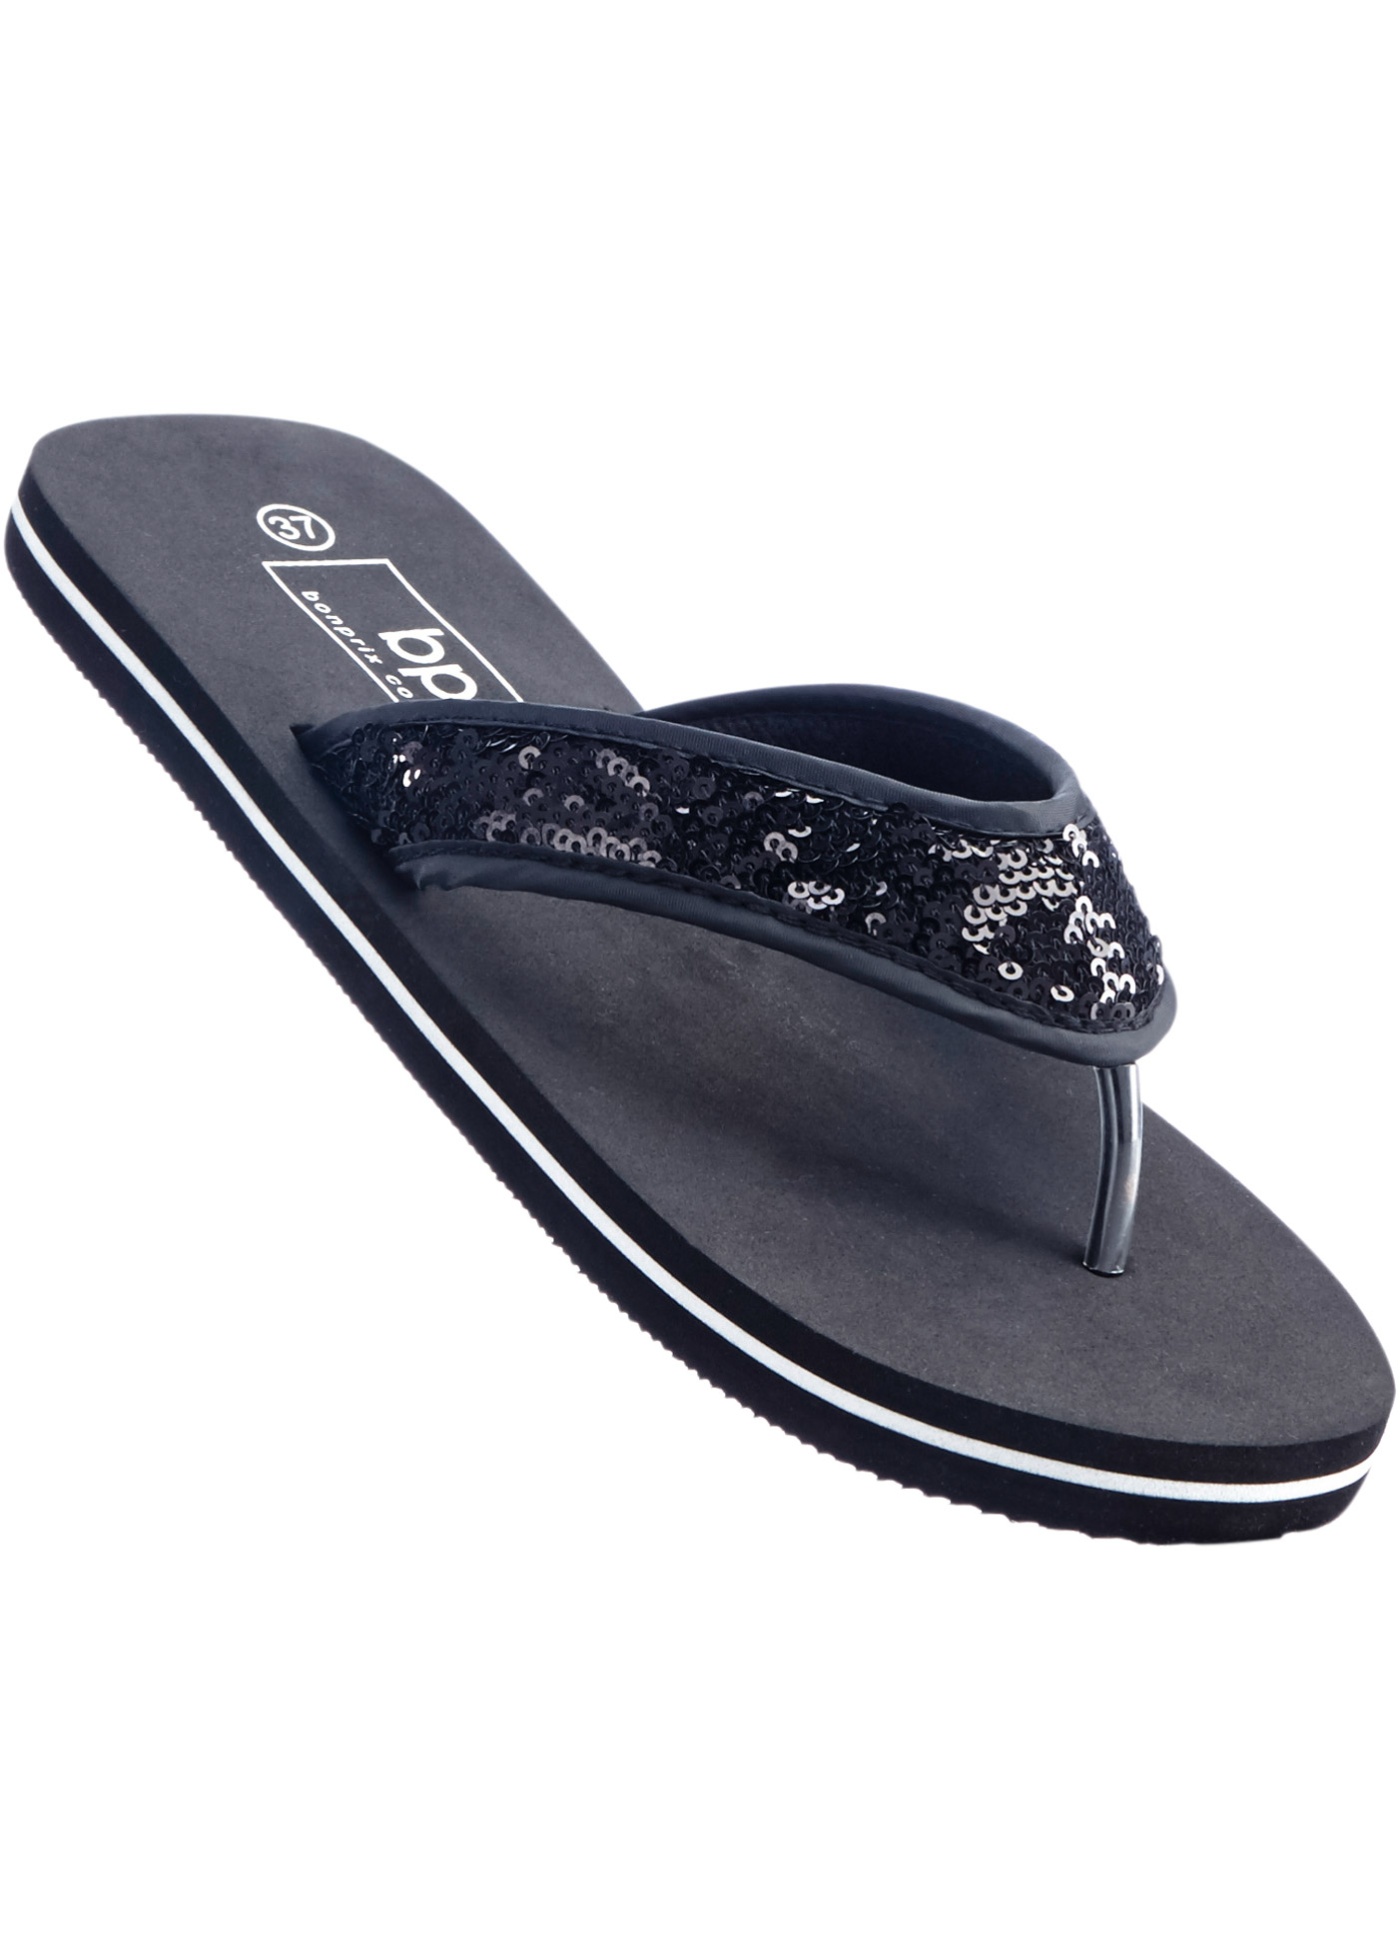 Flip-flop-sandal